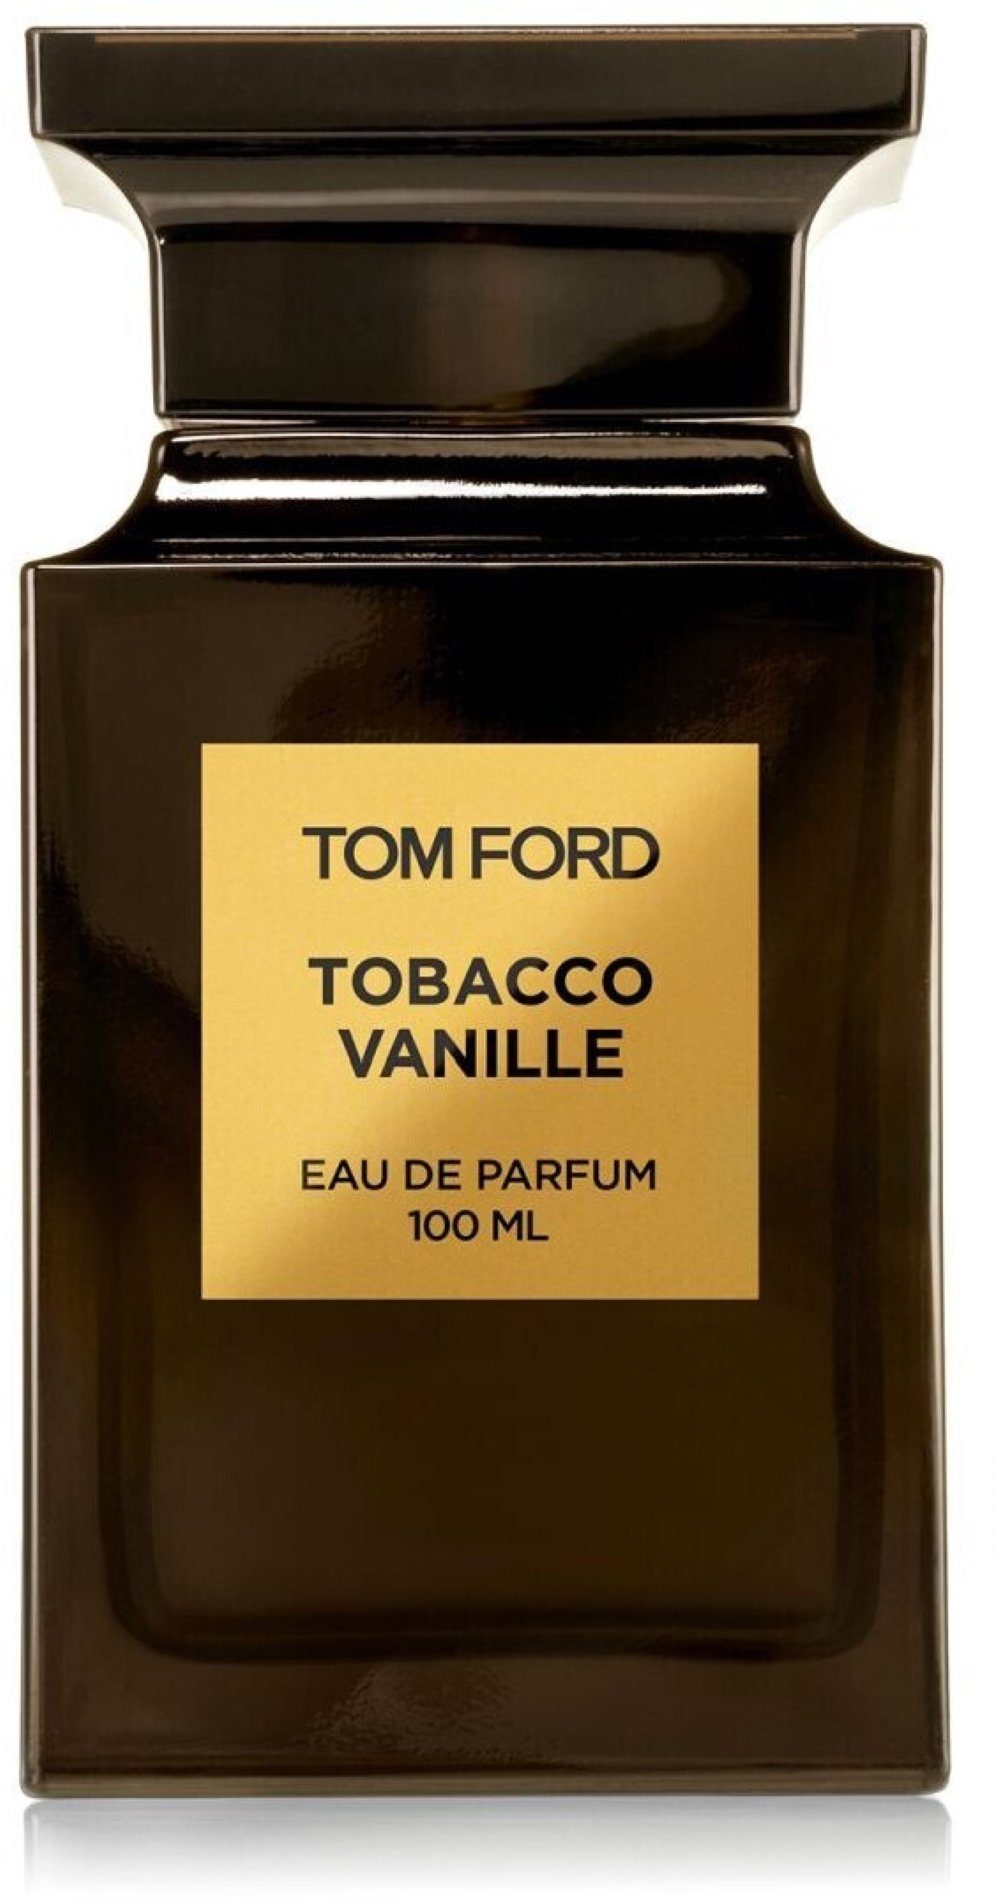 Tom Ford Eau de Parfum Tobacco Vanille 100ml